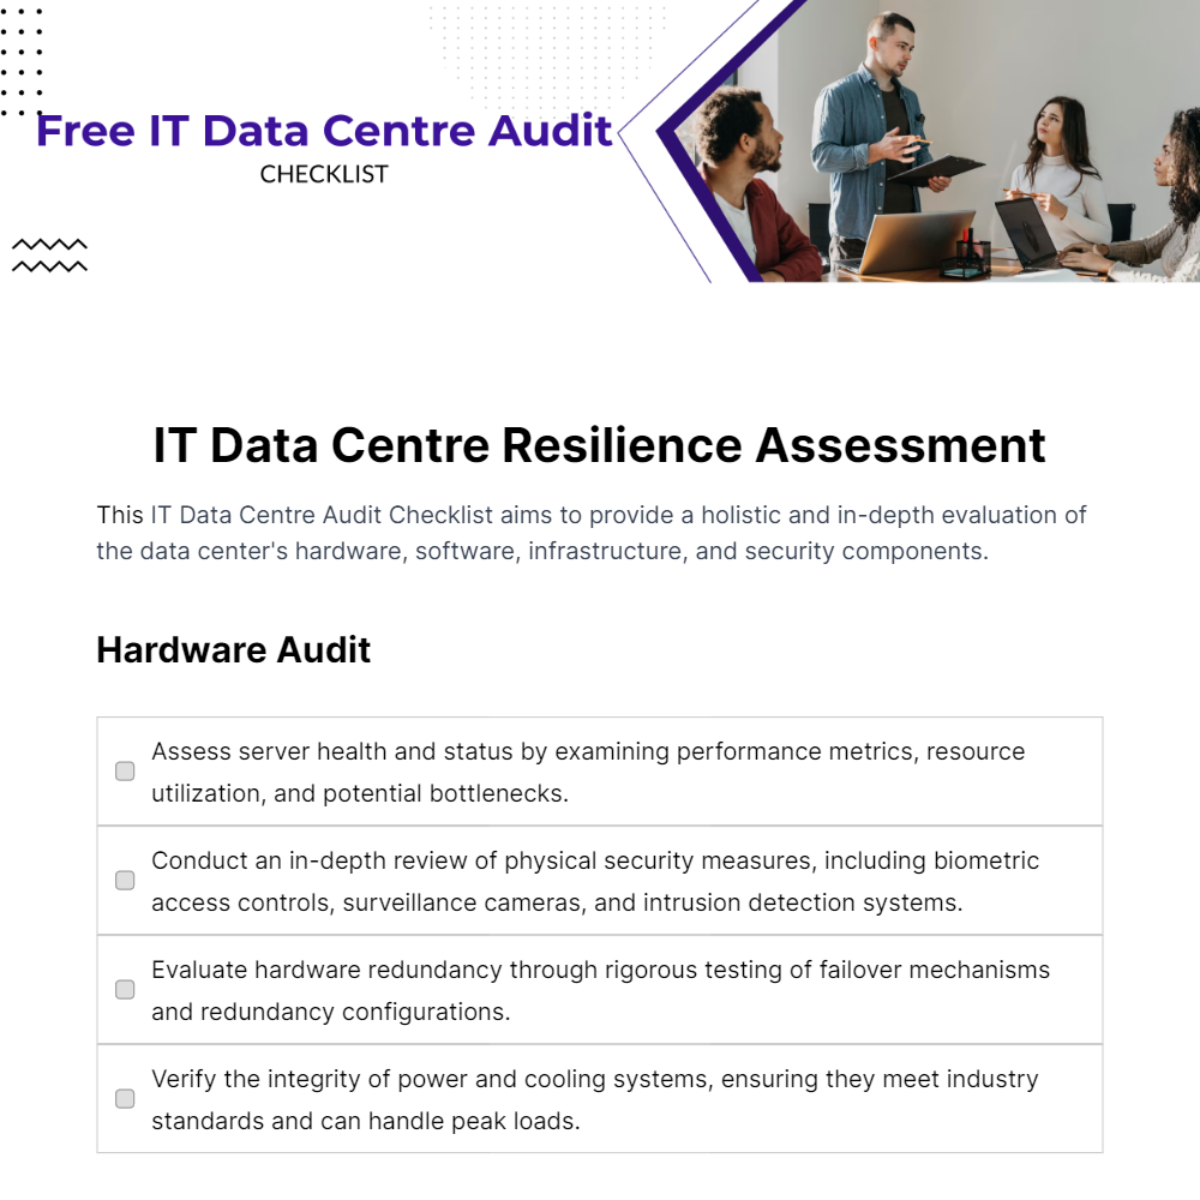 Free IT Data Centre Audit Checklist Template